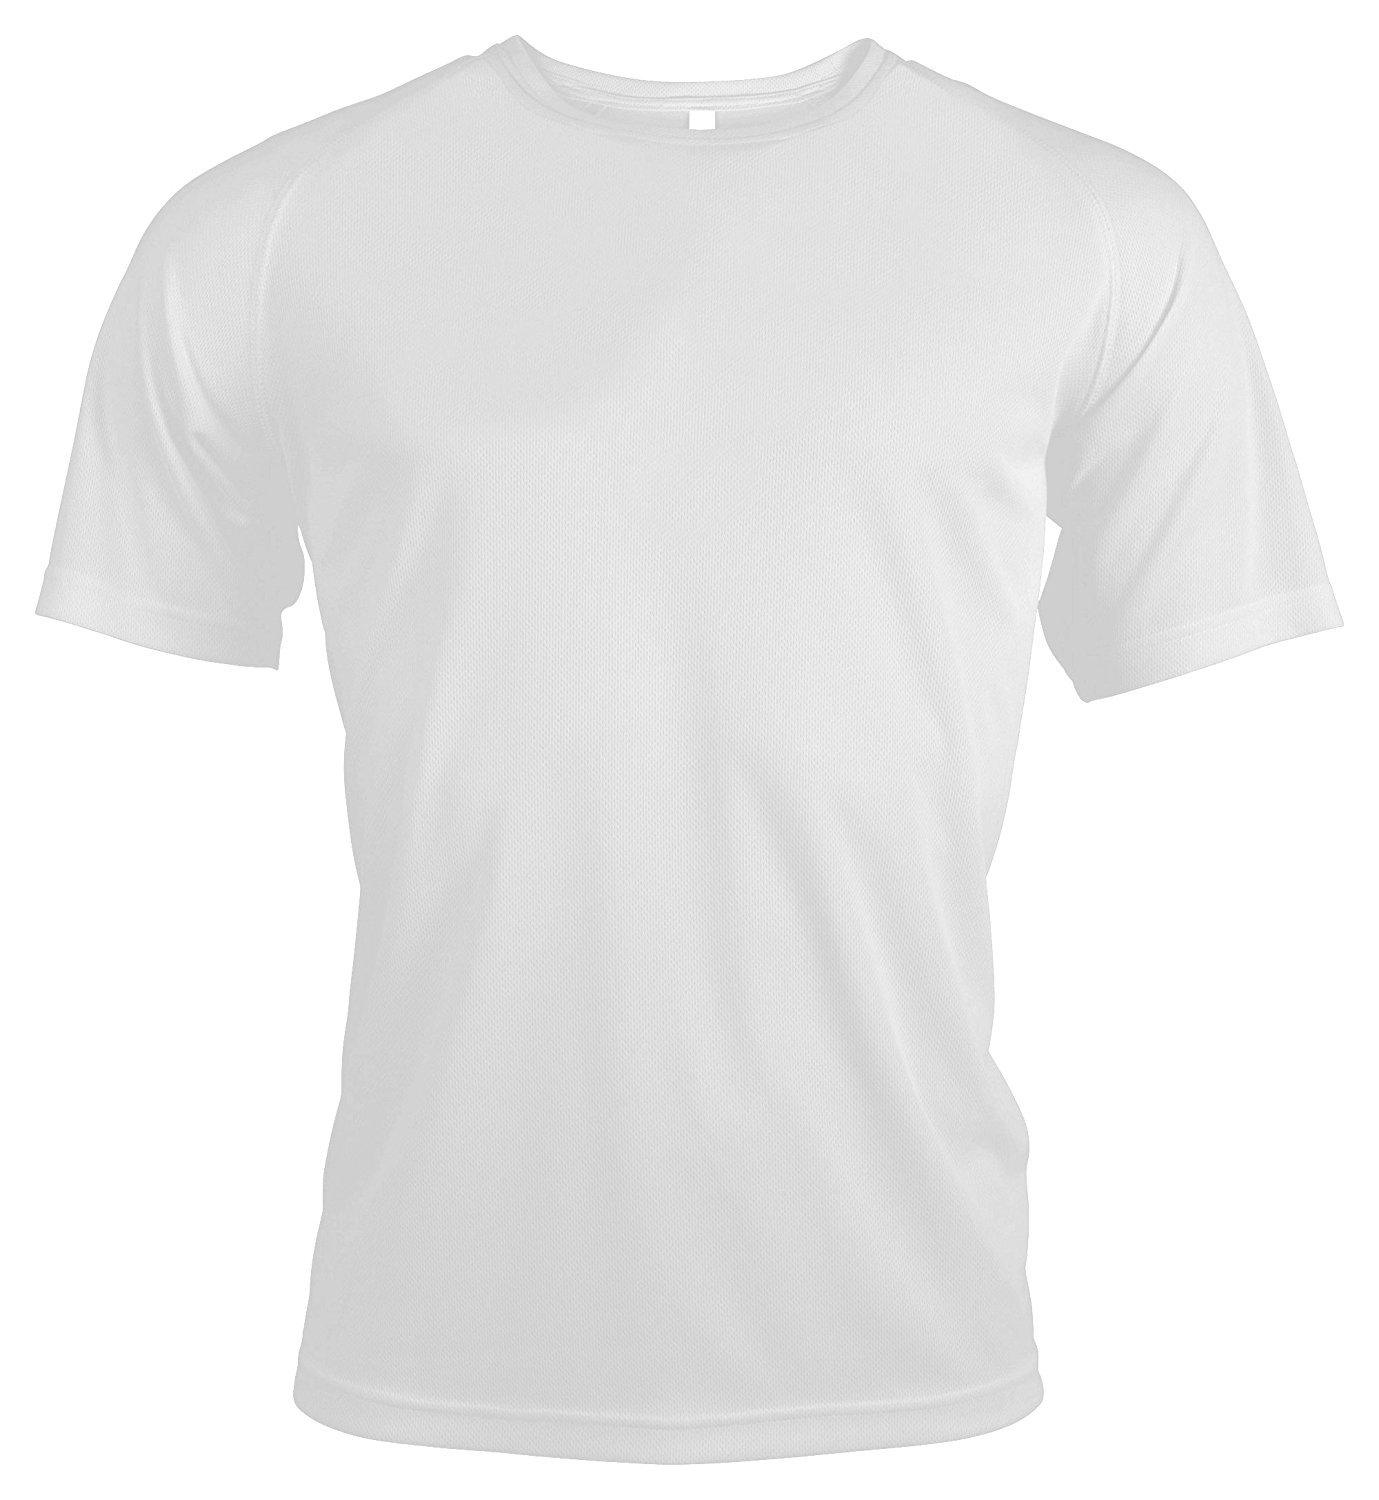 Aqua Royal Technic K16260 Unisex Sports T-Shirt